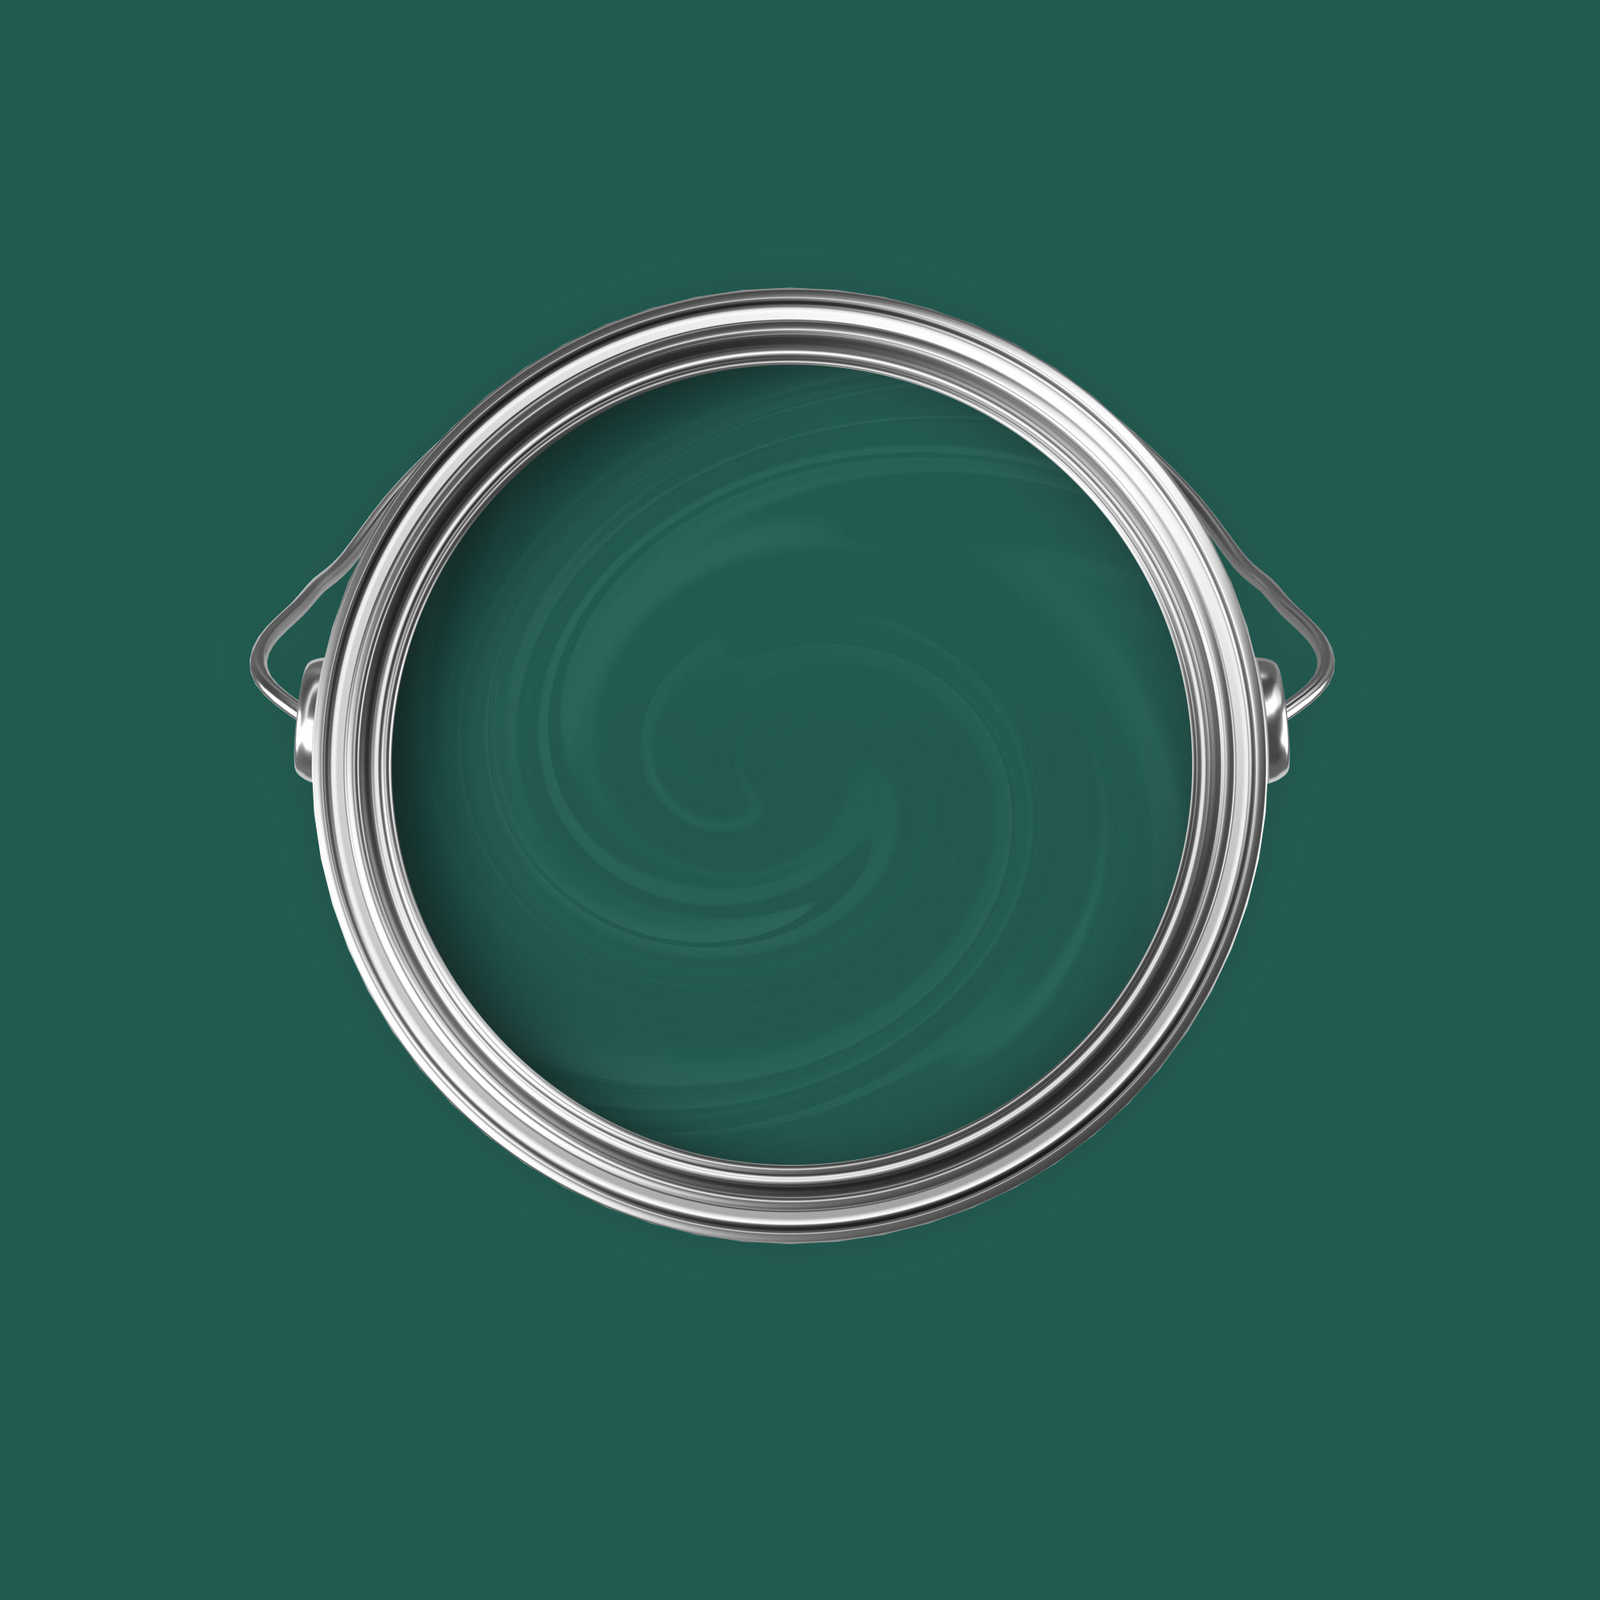             Premium Wandfarbe prachtvolles Smaragdgrün »Expressive Emerald« NW412 – 5 Liter
        